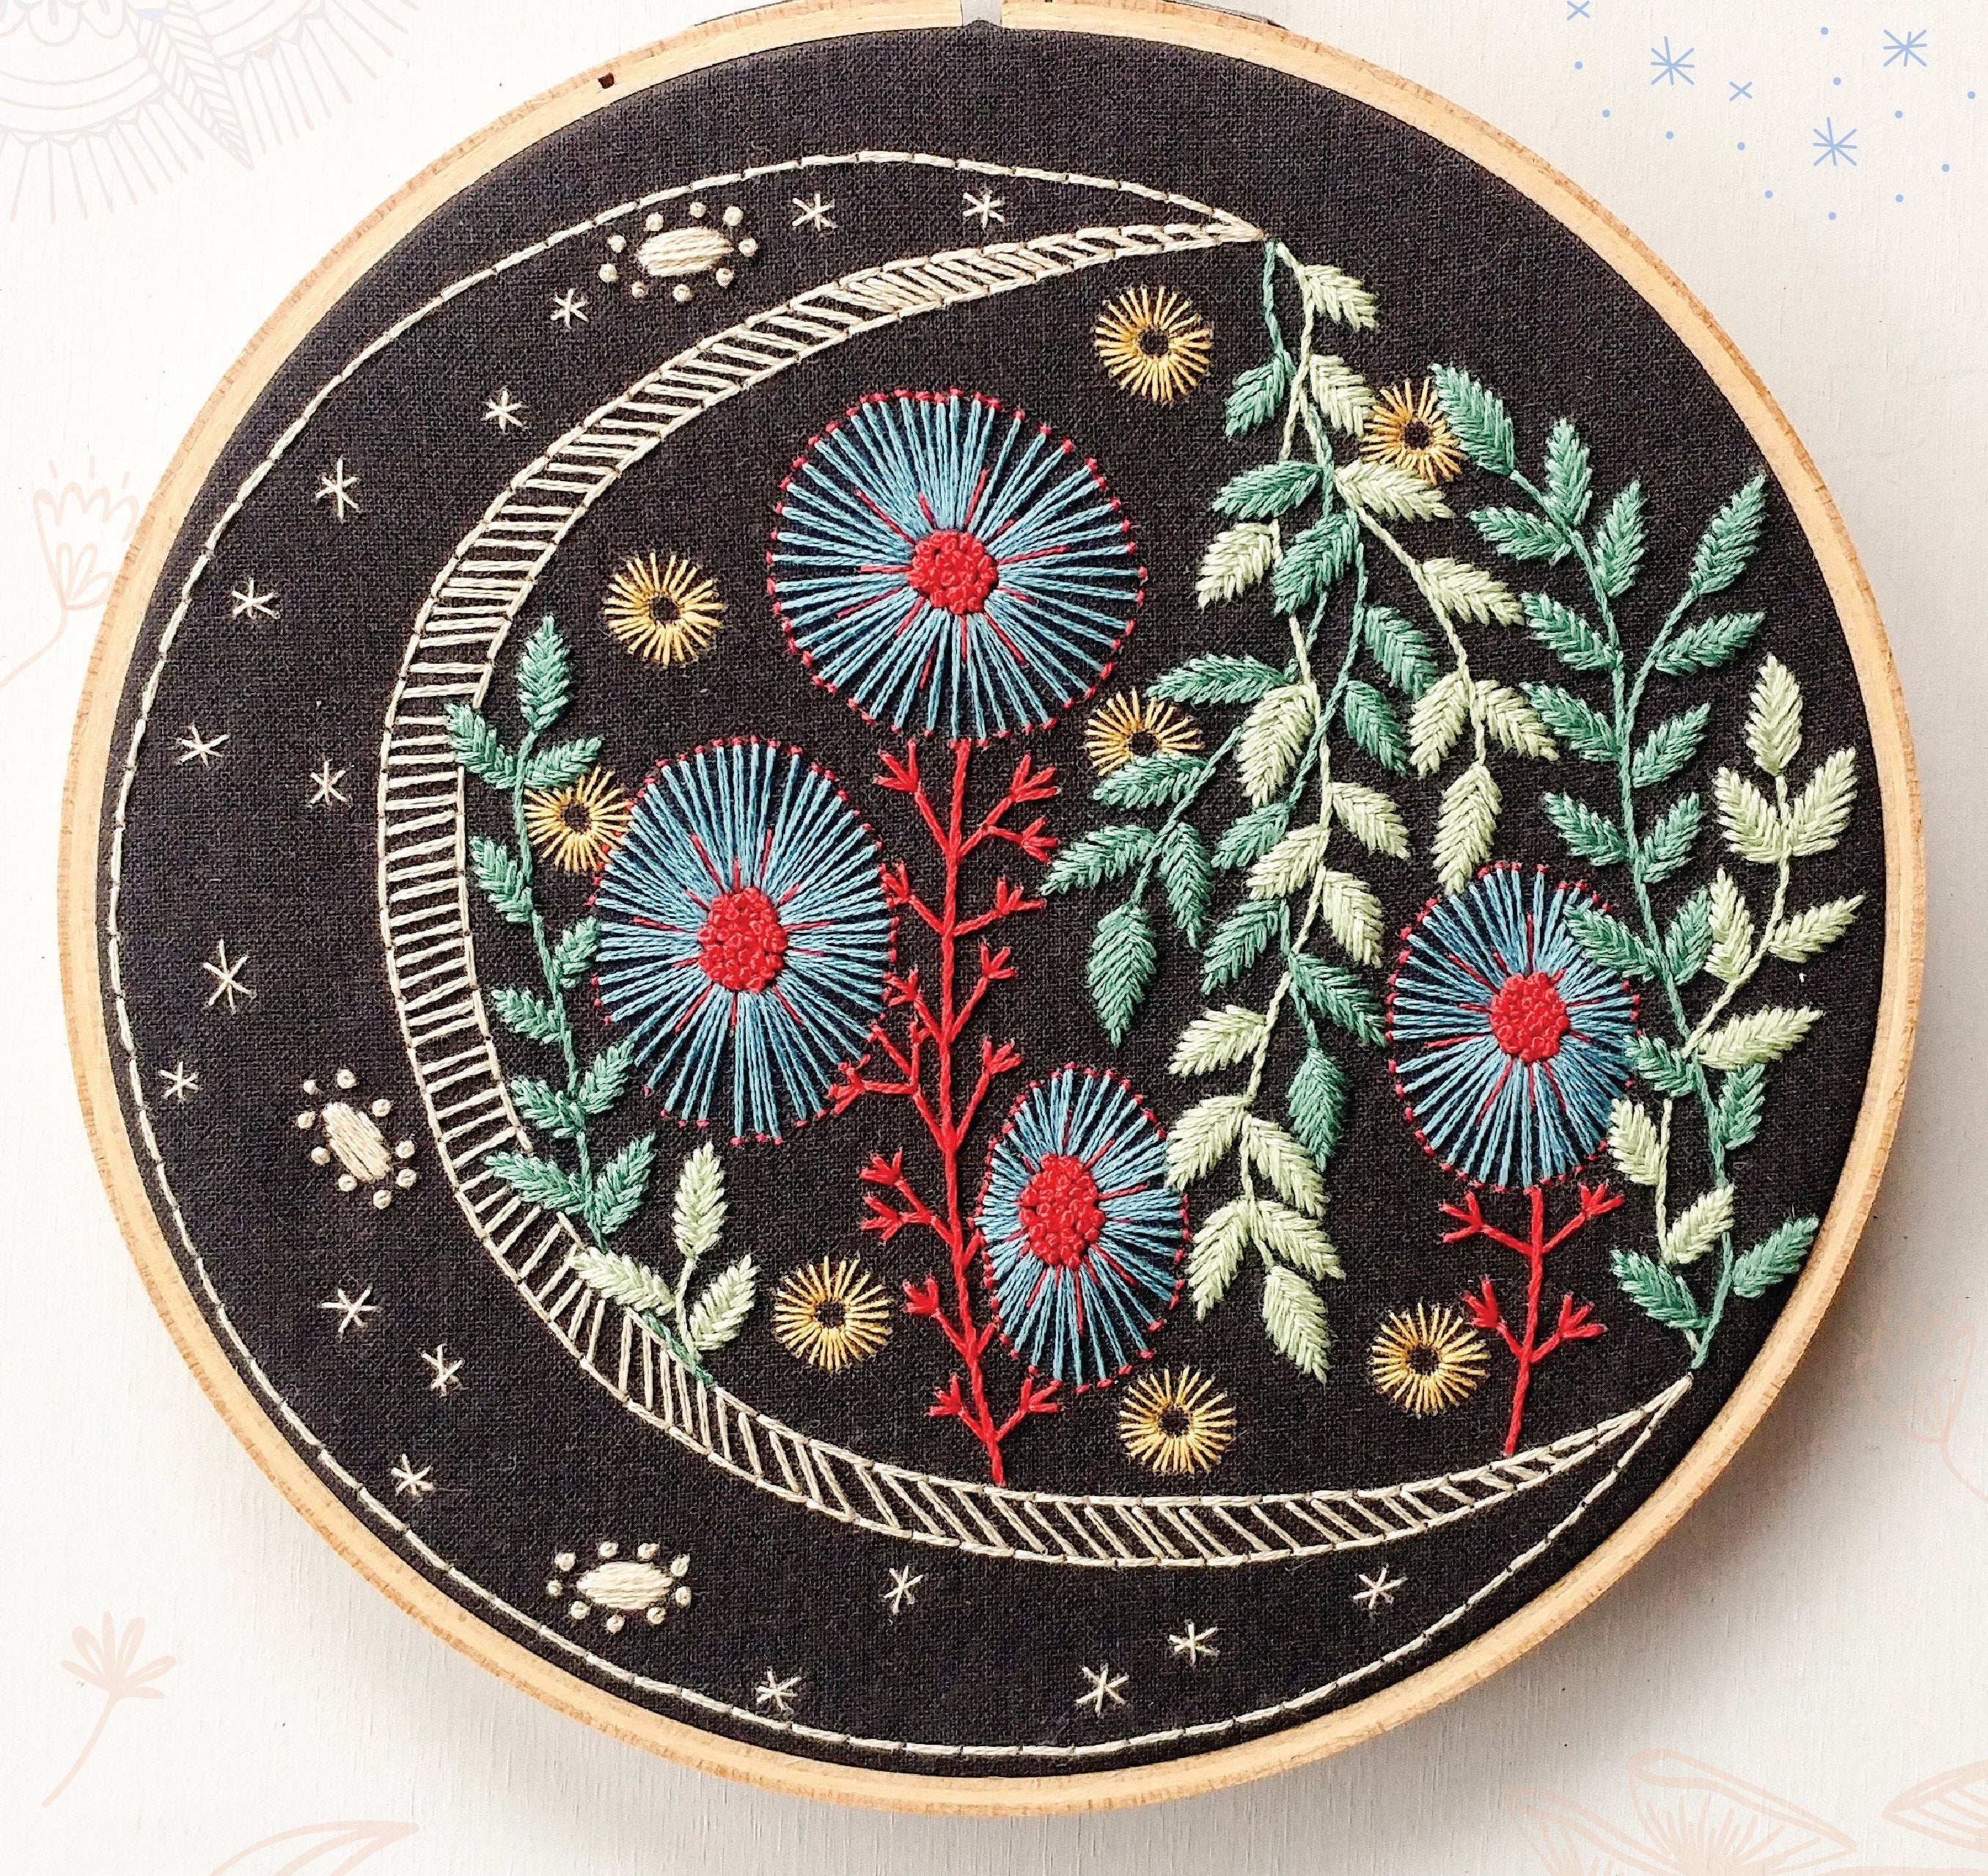 Crafting, Embroidery, Fun!